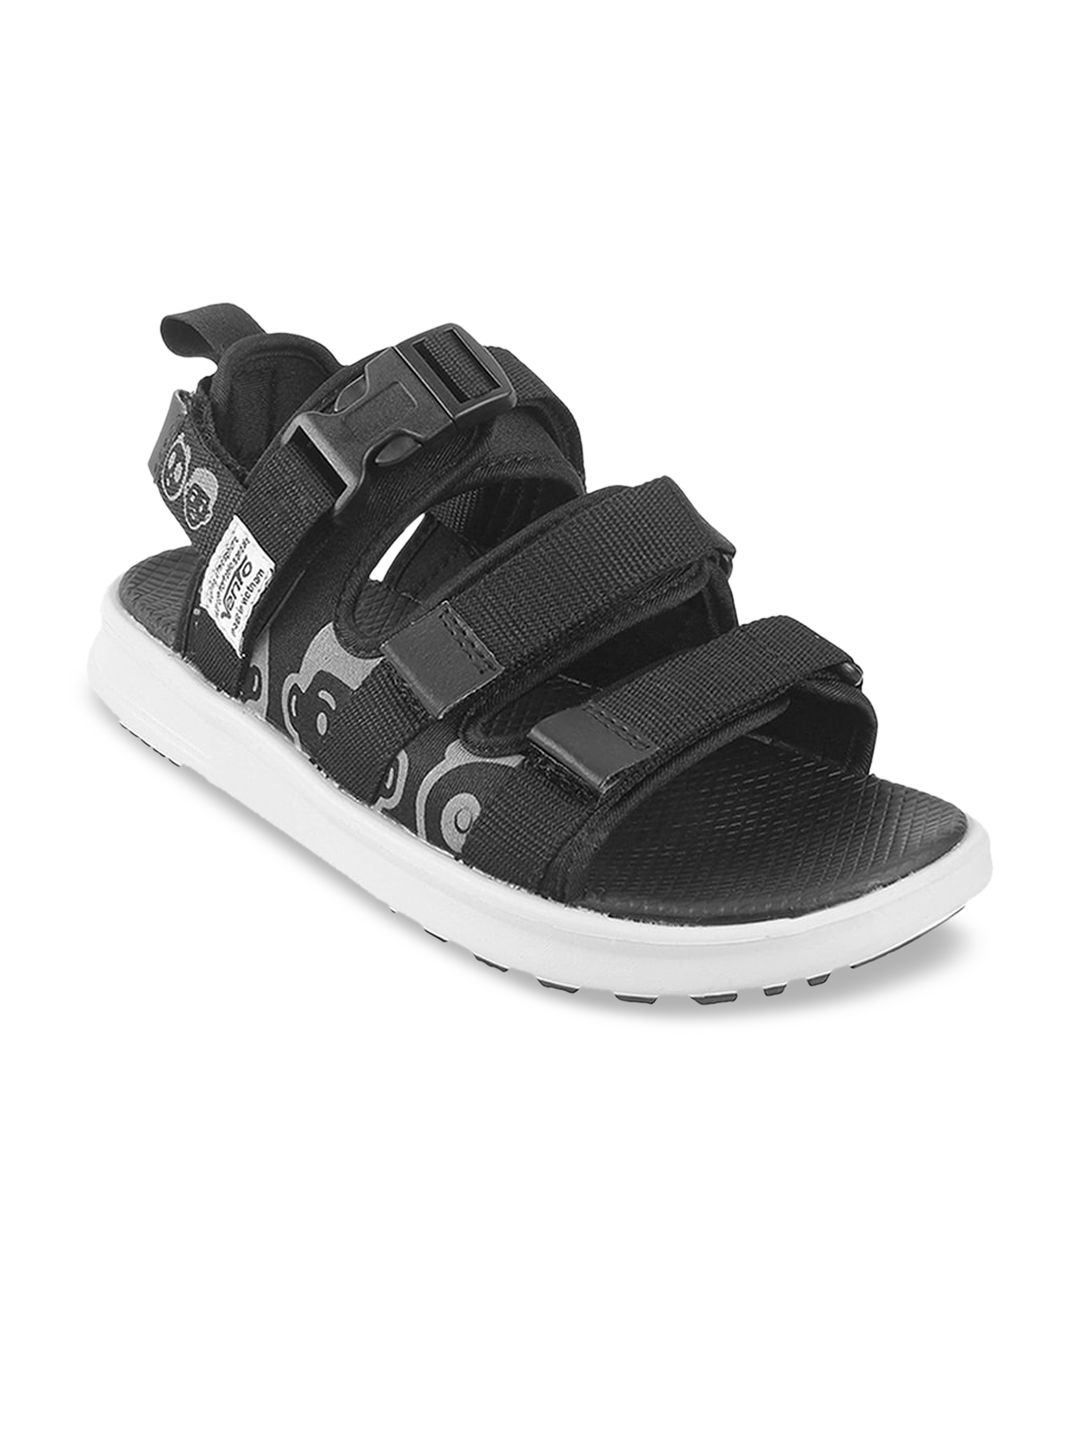 Vento Unisex Black Solid Sports Sandals Price in India